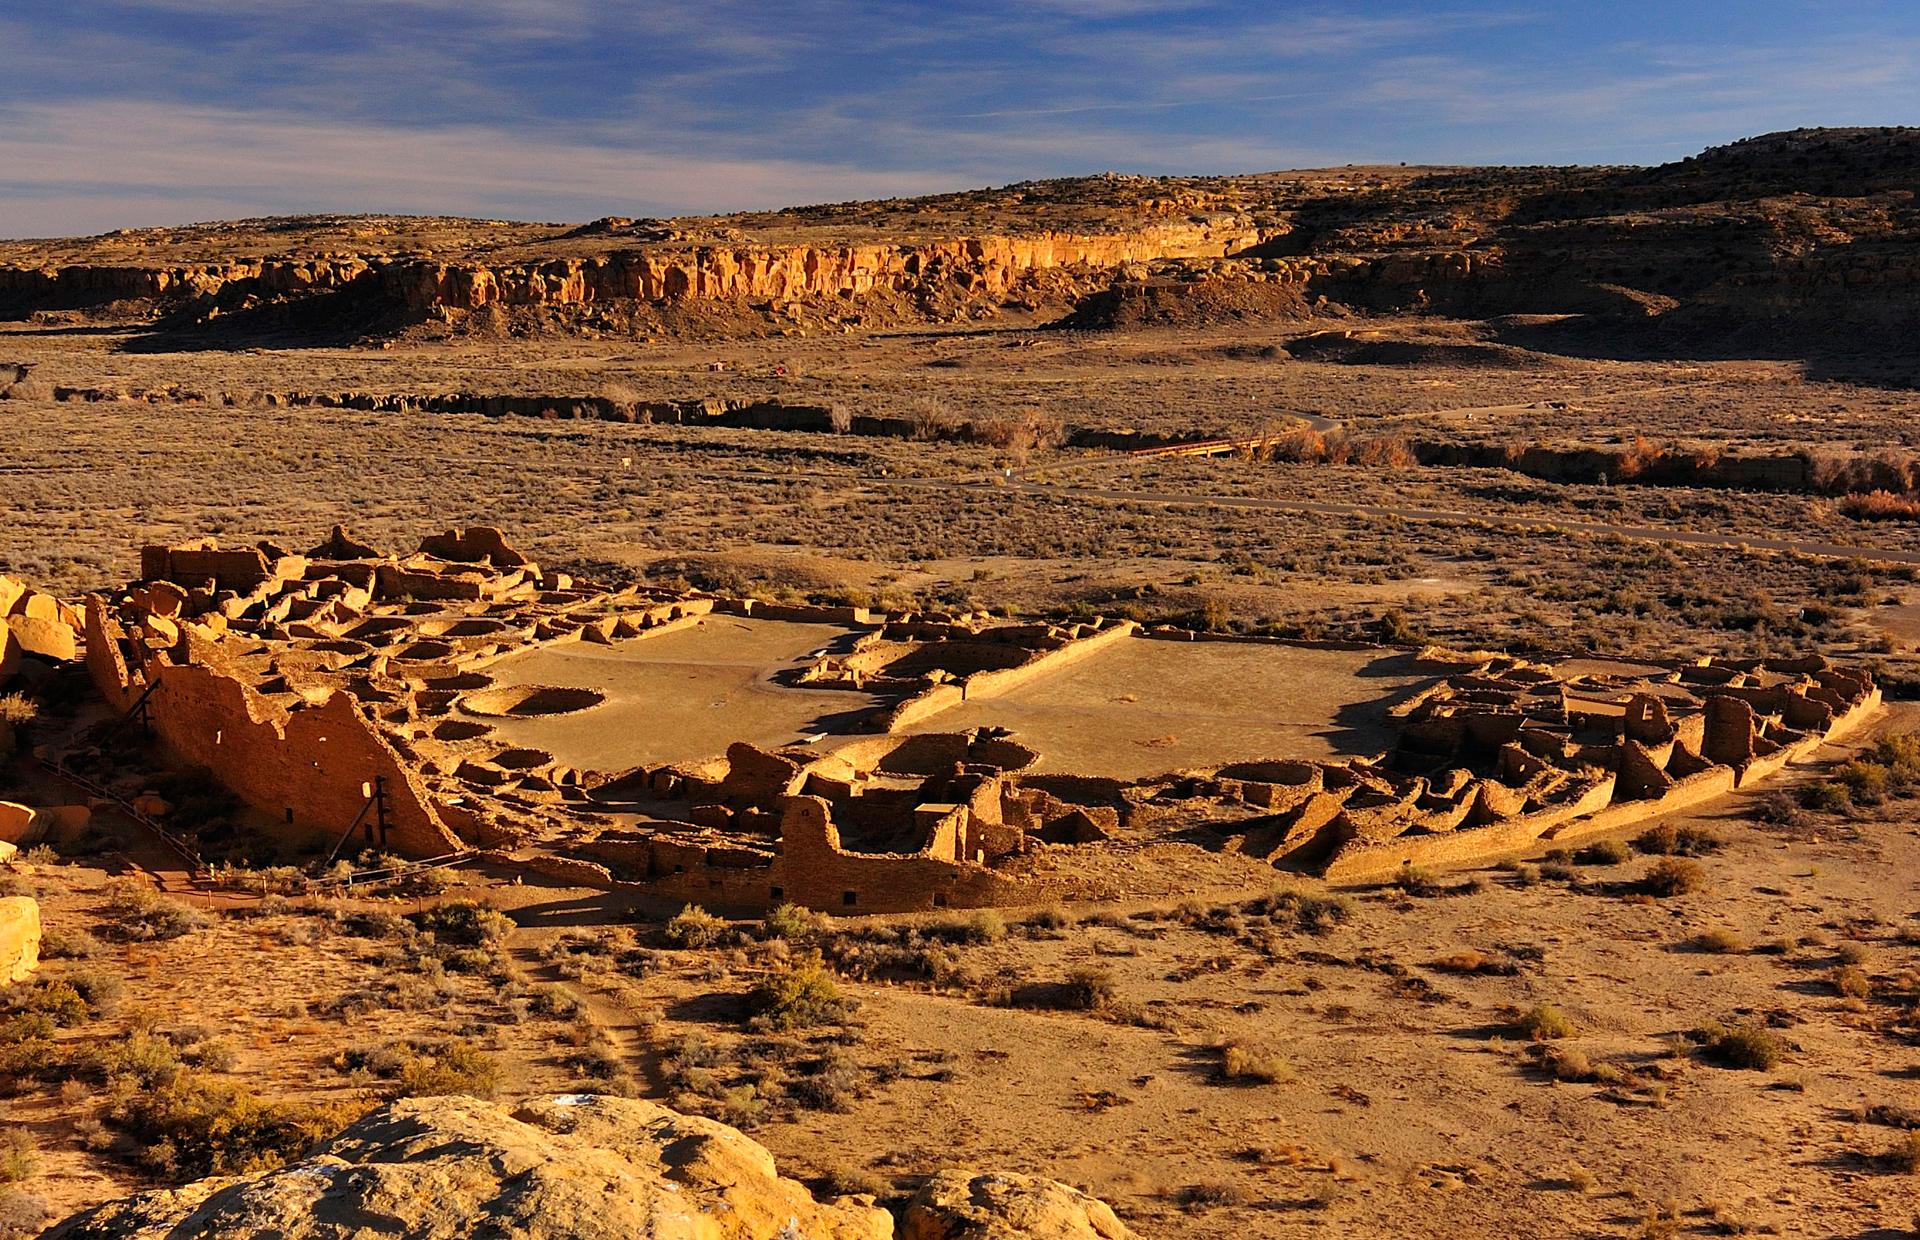 Pueblo Bonito in New Mexico’s San Juan Basin. Photo courtesy of Nate Crabtree, http://www.natecrabtreephotography.com.